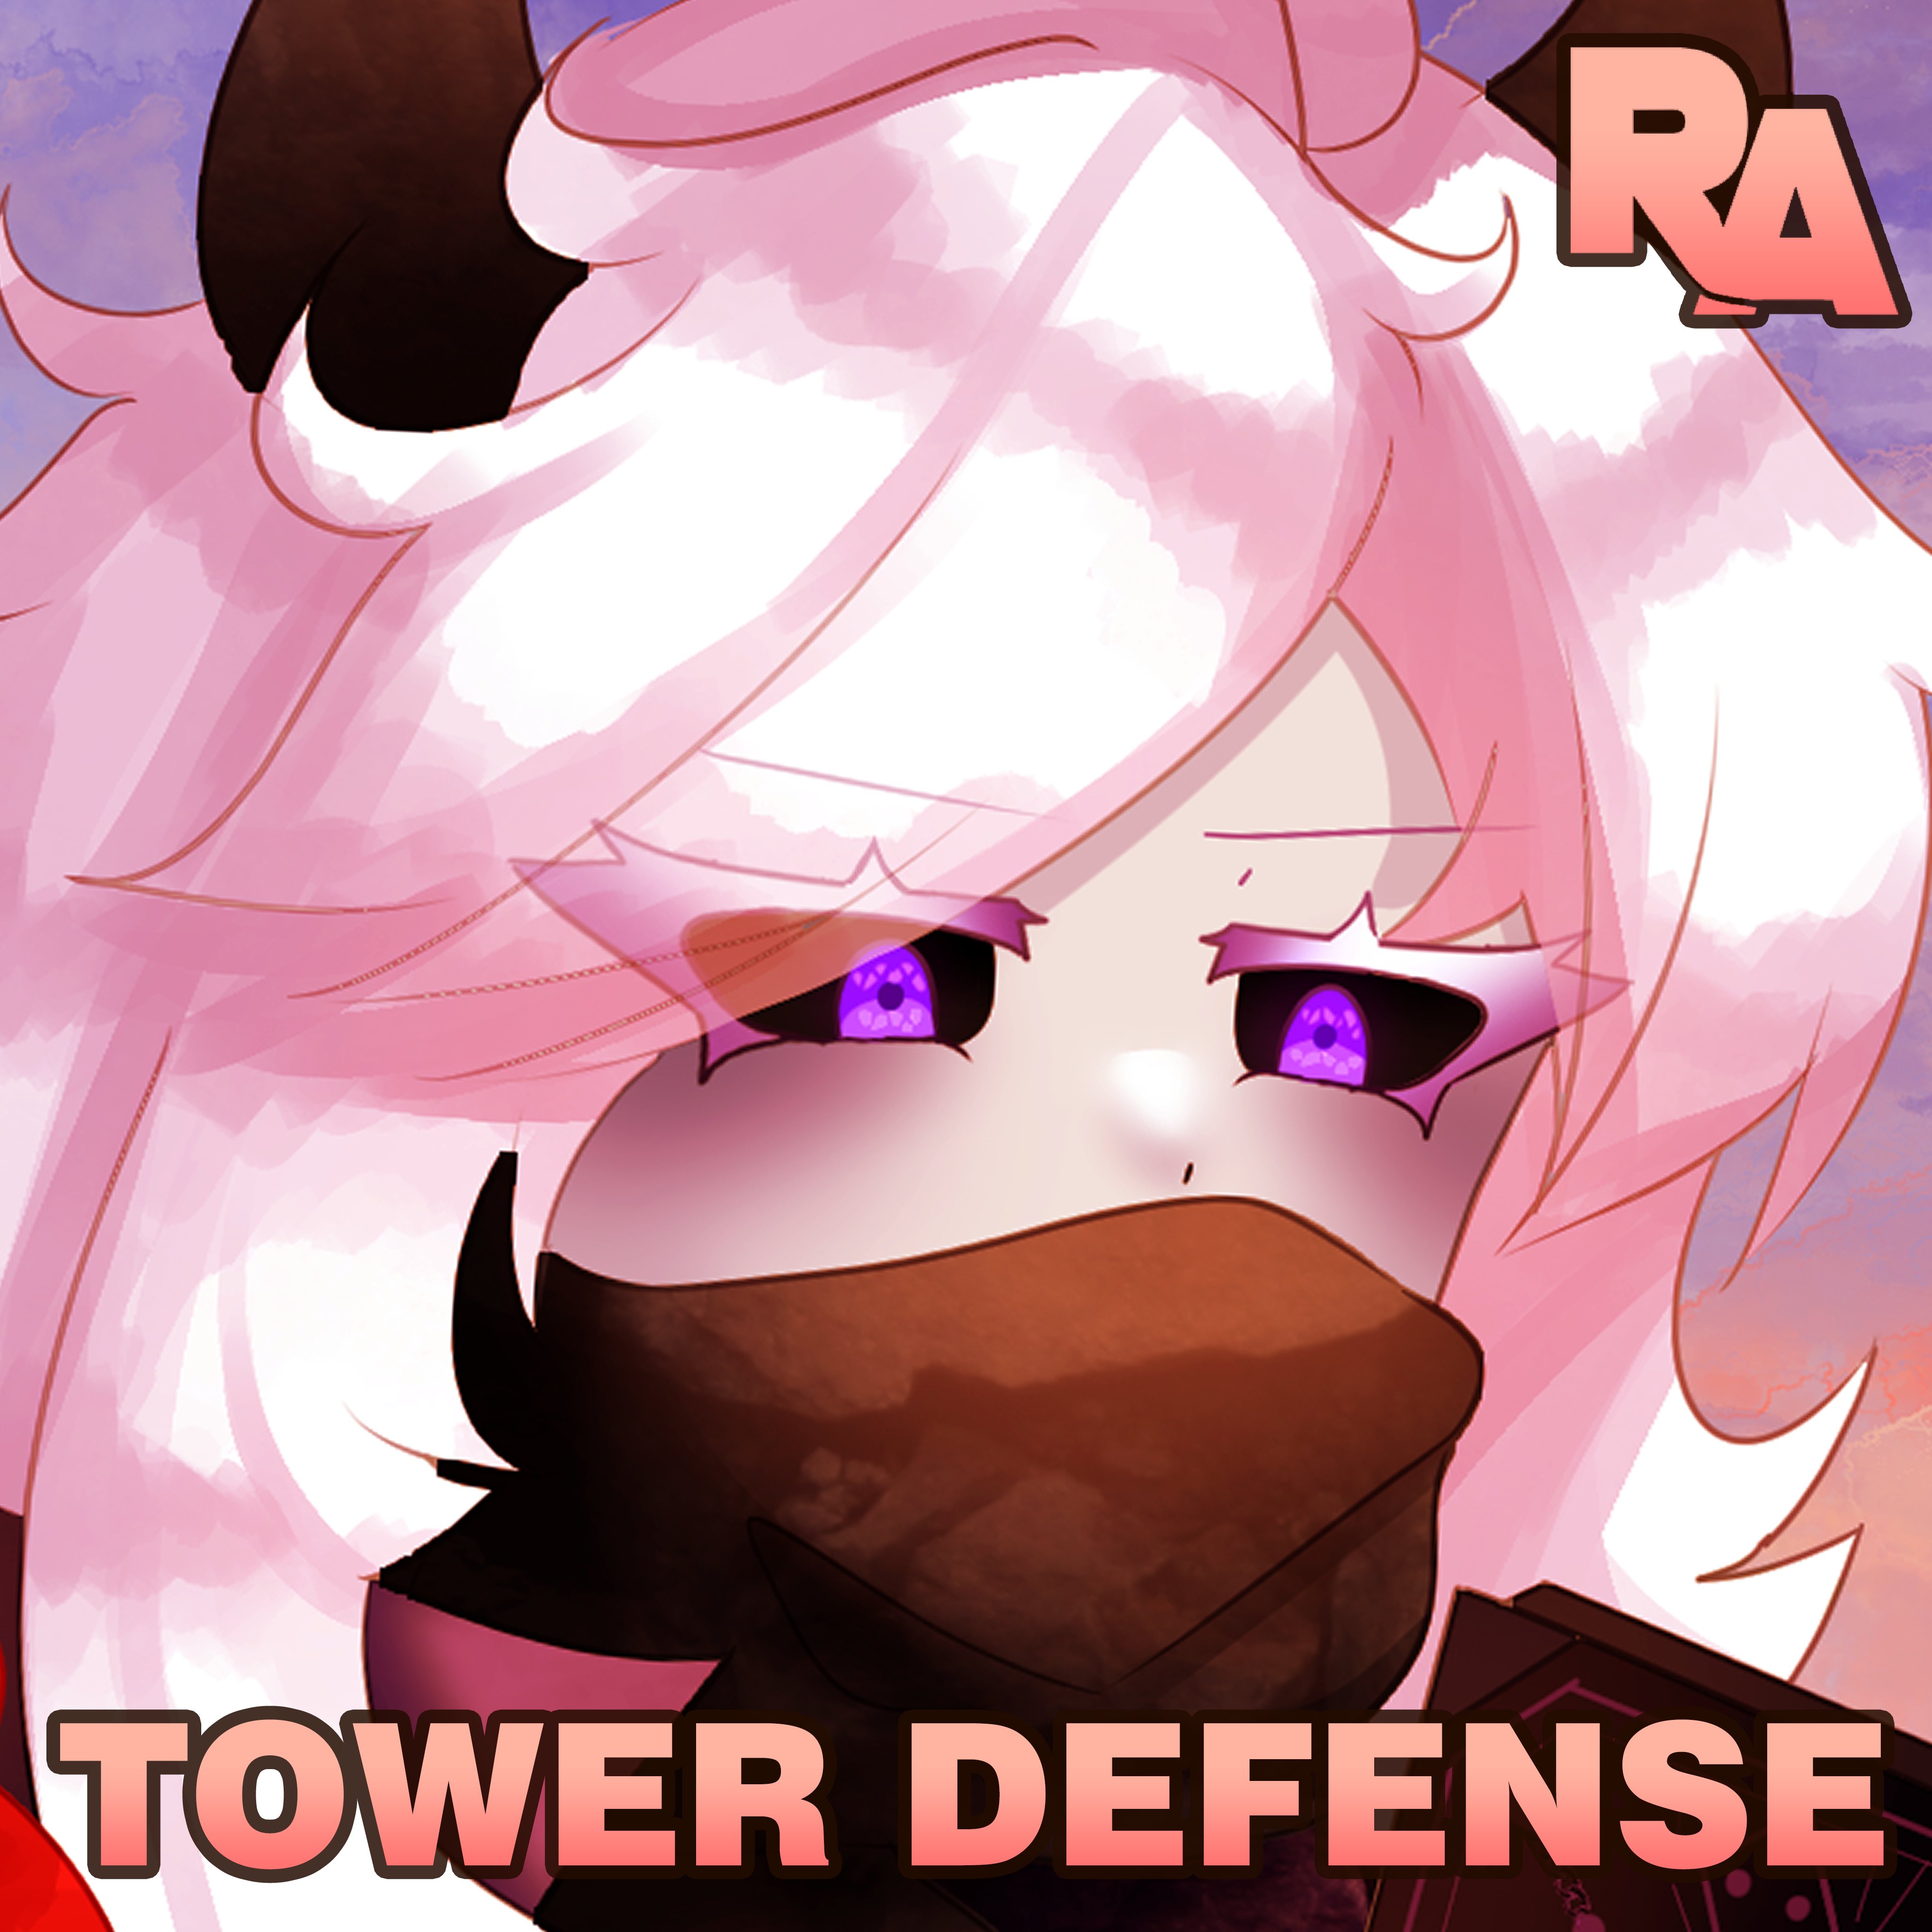 Roblox Undertale Tower Defense Codes (December 2023)